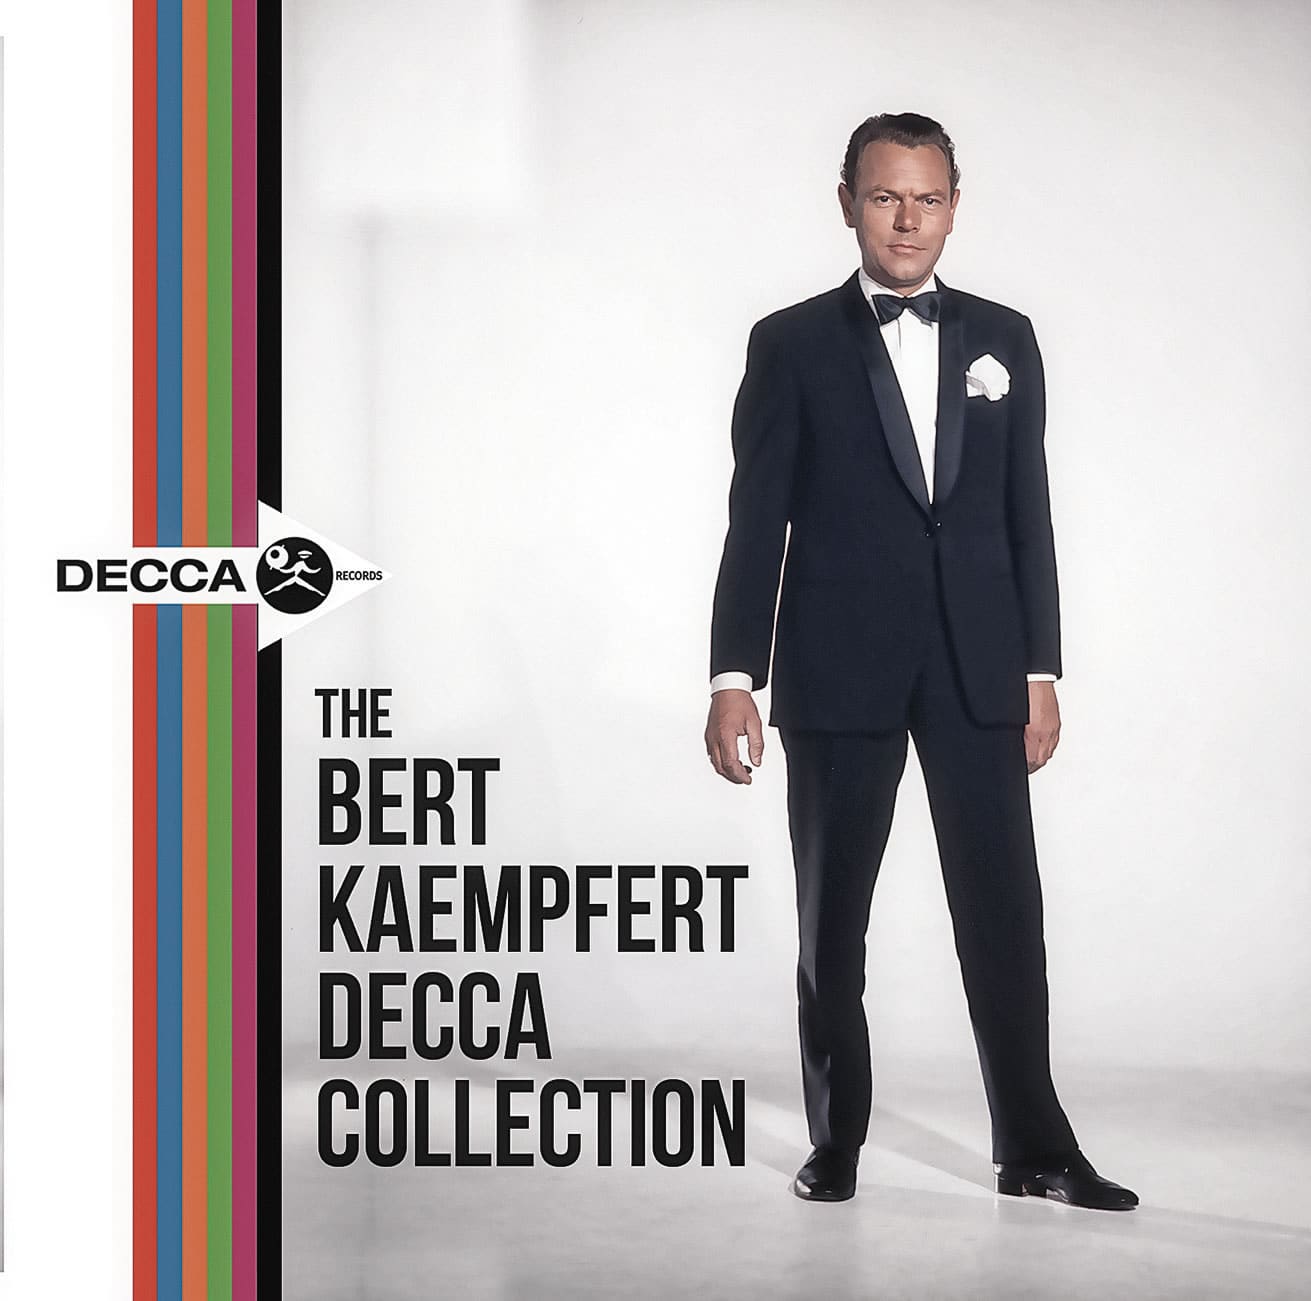 Decca arrives late for blockbuster centenary